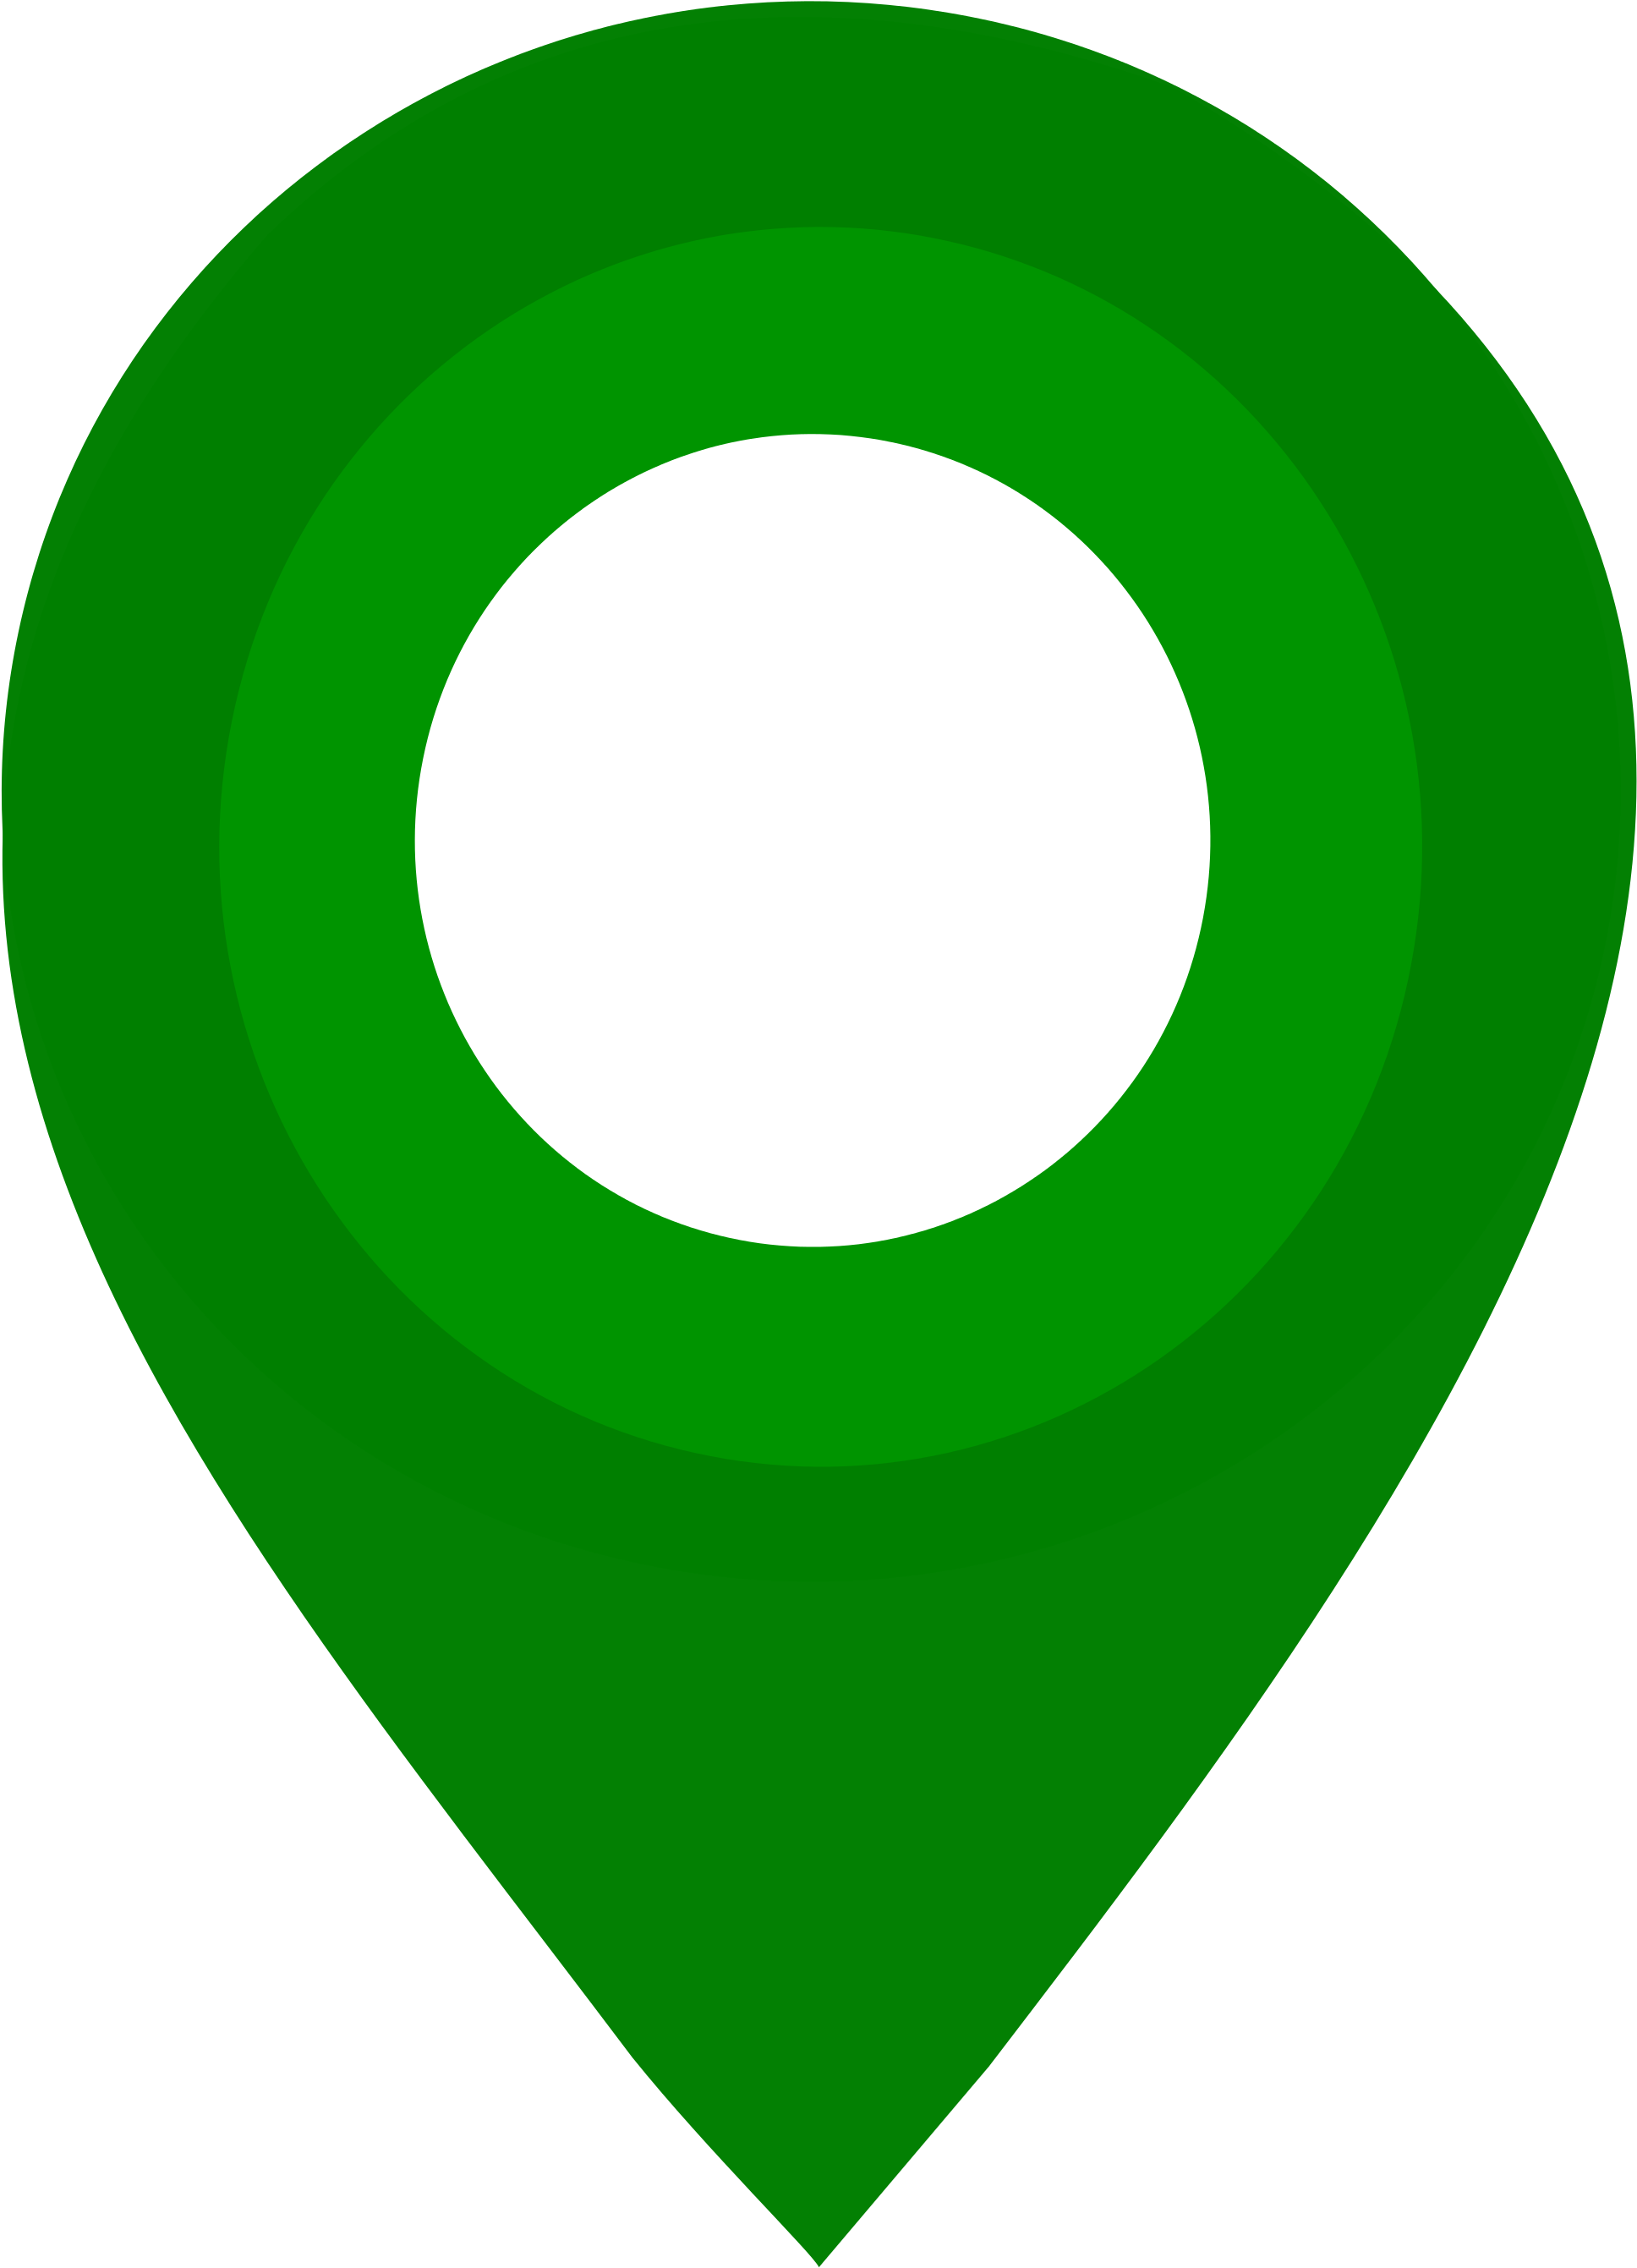 Pin icon. Знак локации. Значок местоположения. Локация иконка. Геолокация иконка.